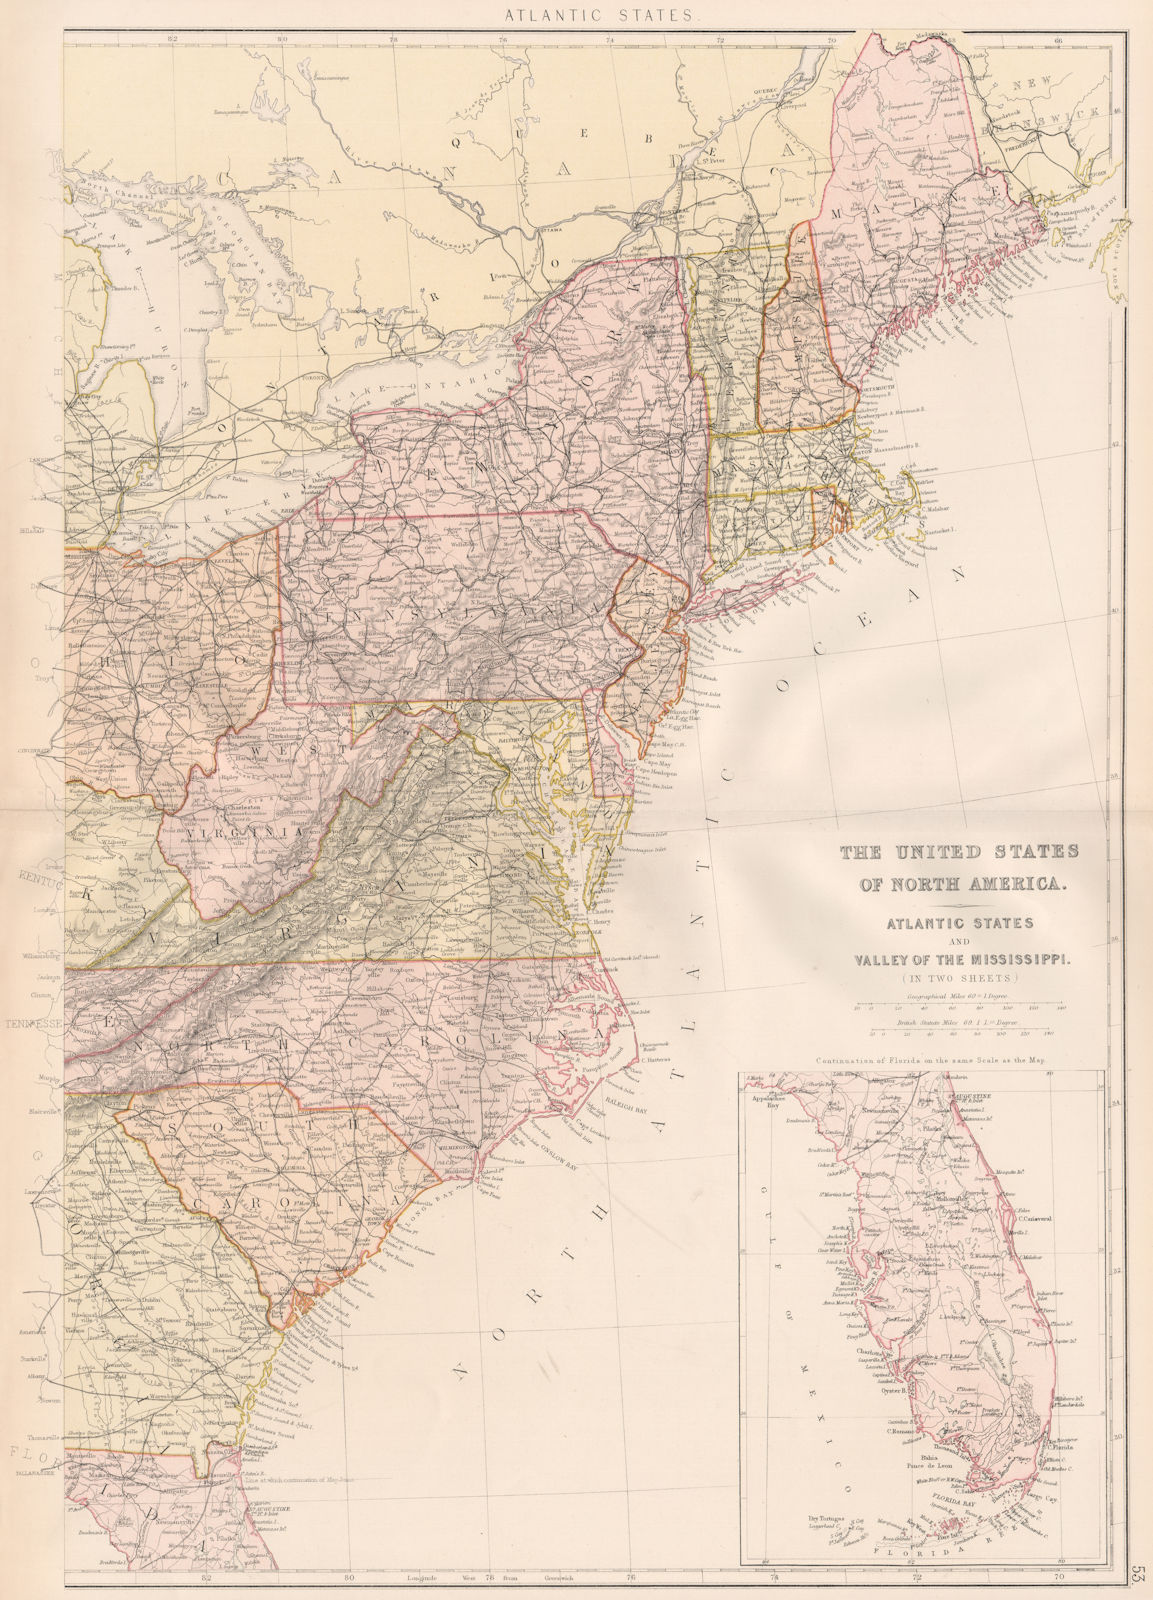 Associate Product ATLANTIC STATES. New England Appalachians Carolinas Florida. Railroads 1882 map